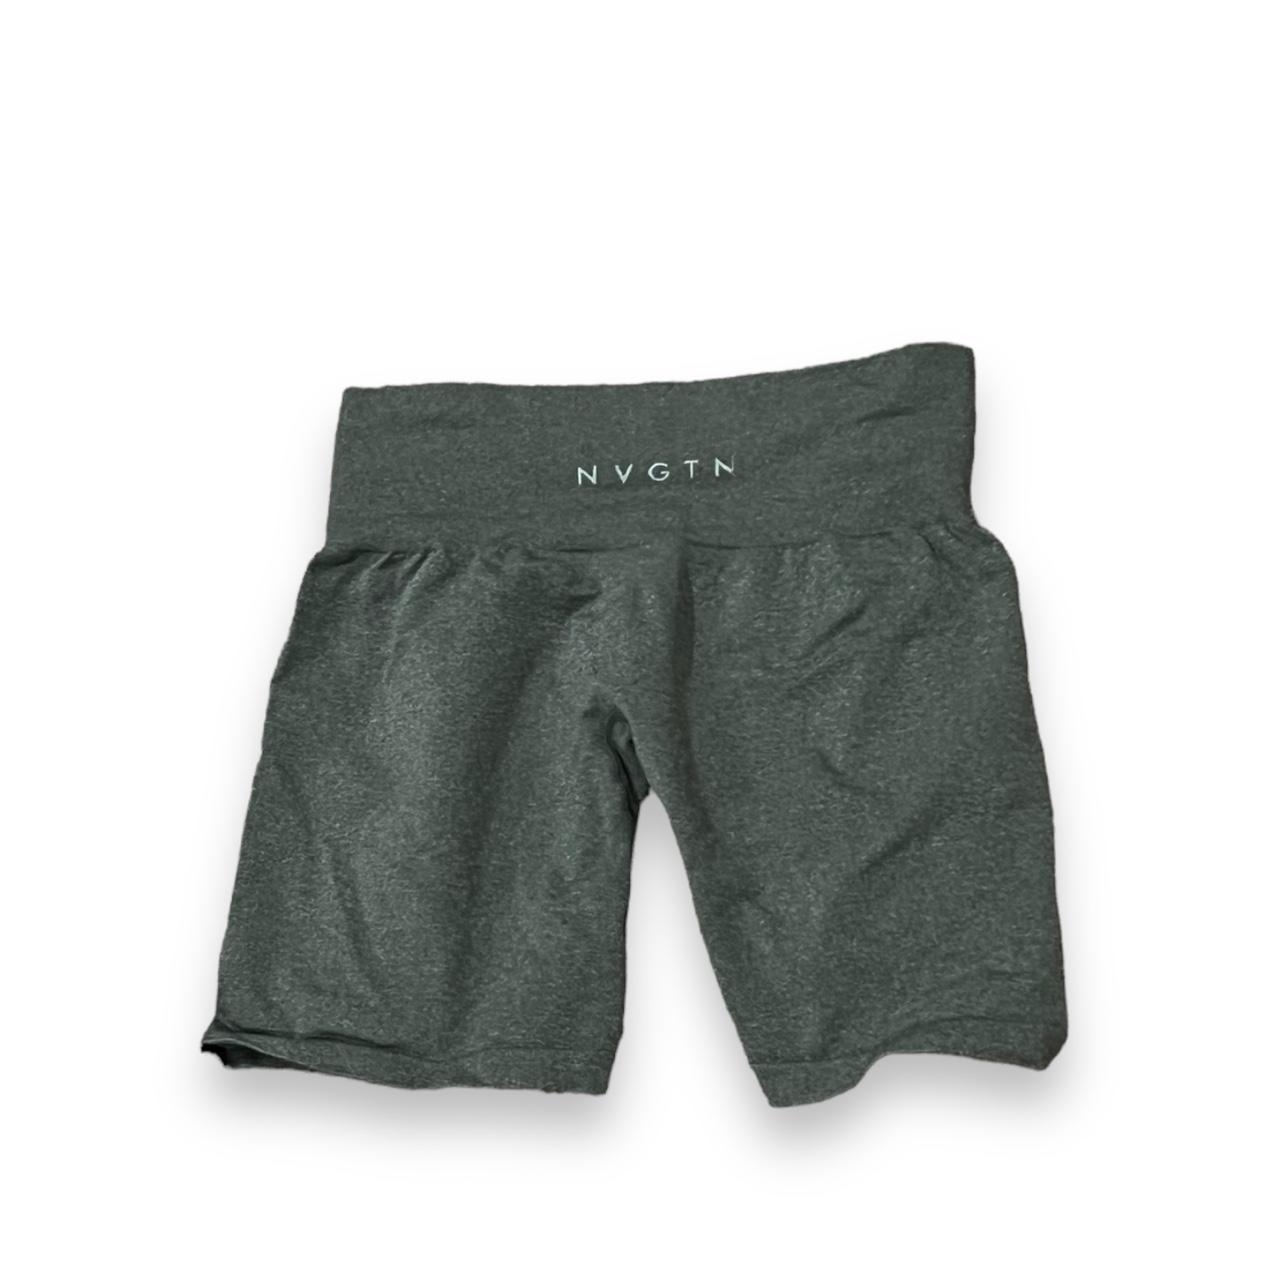 Nvgtn seamless shorts in khaki No contour lines - - Depop